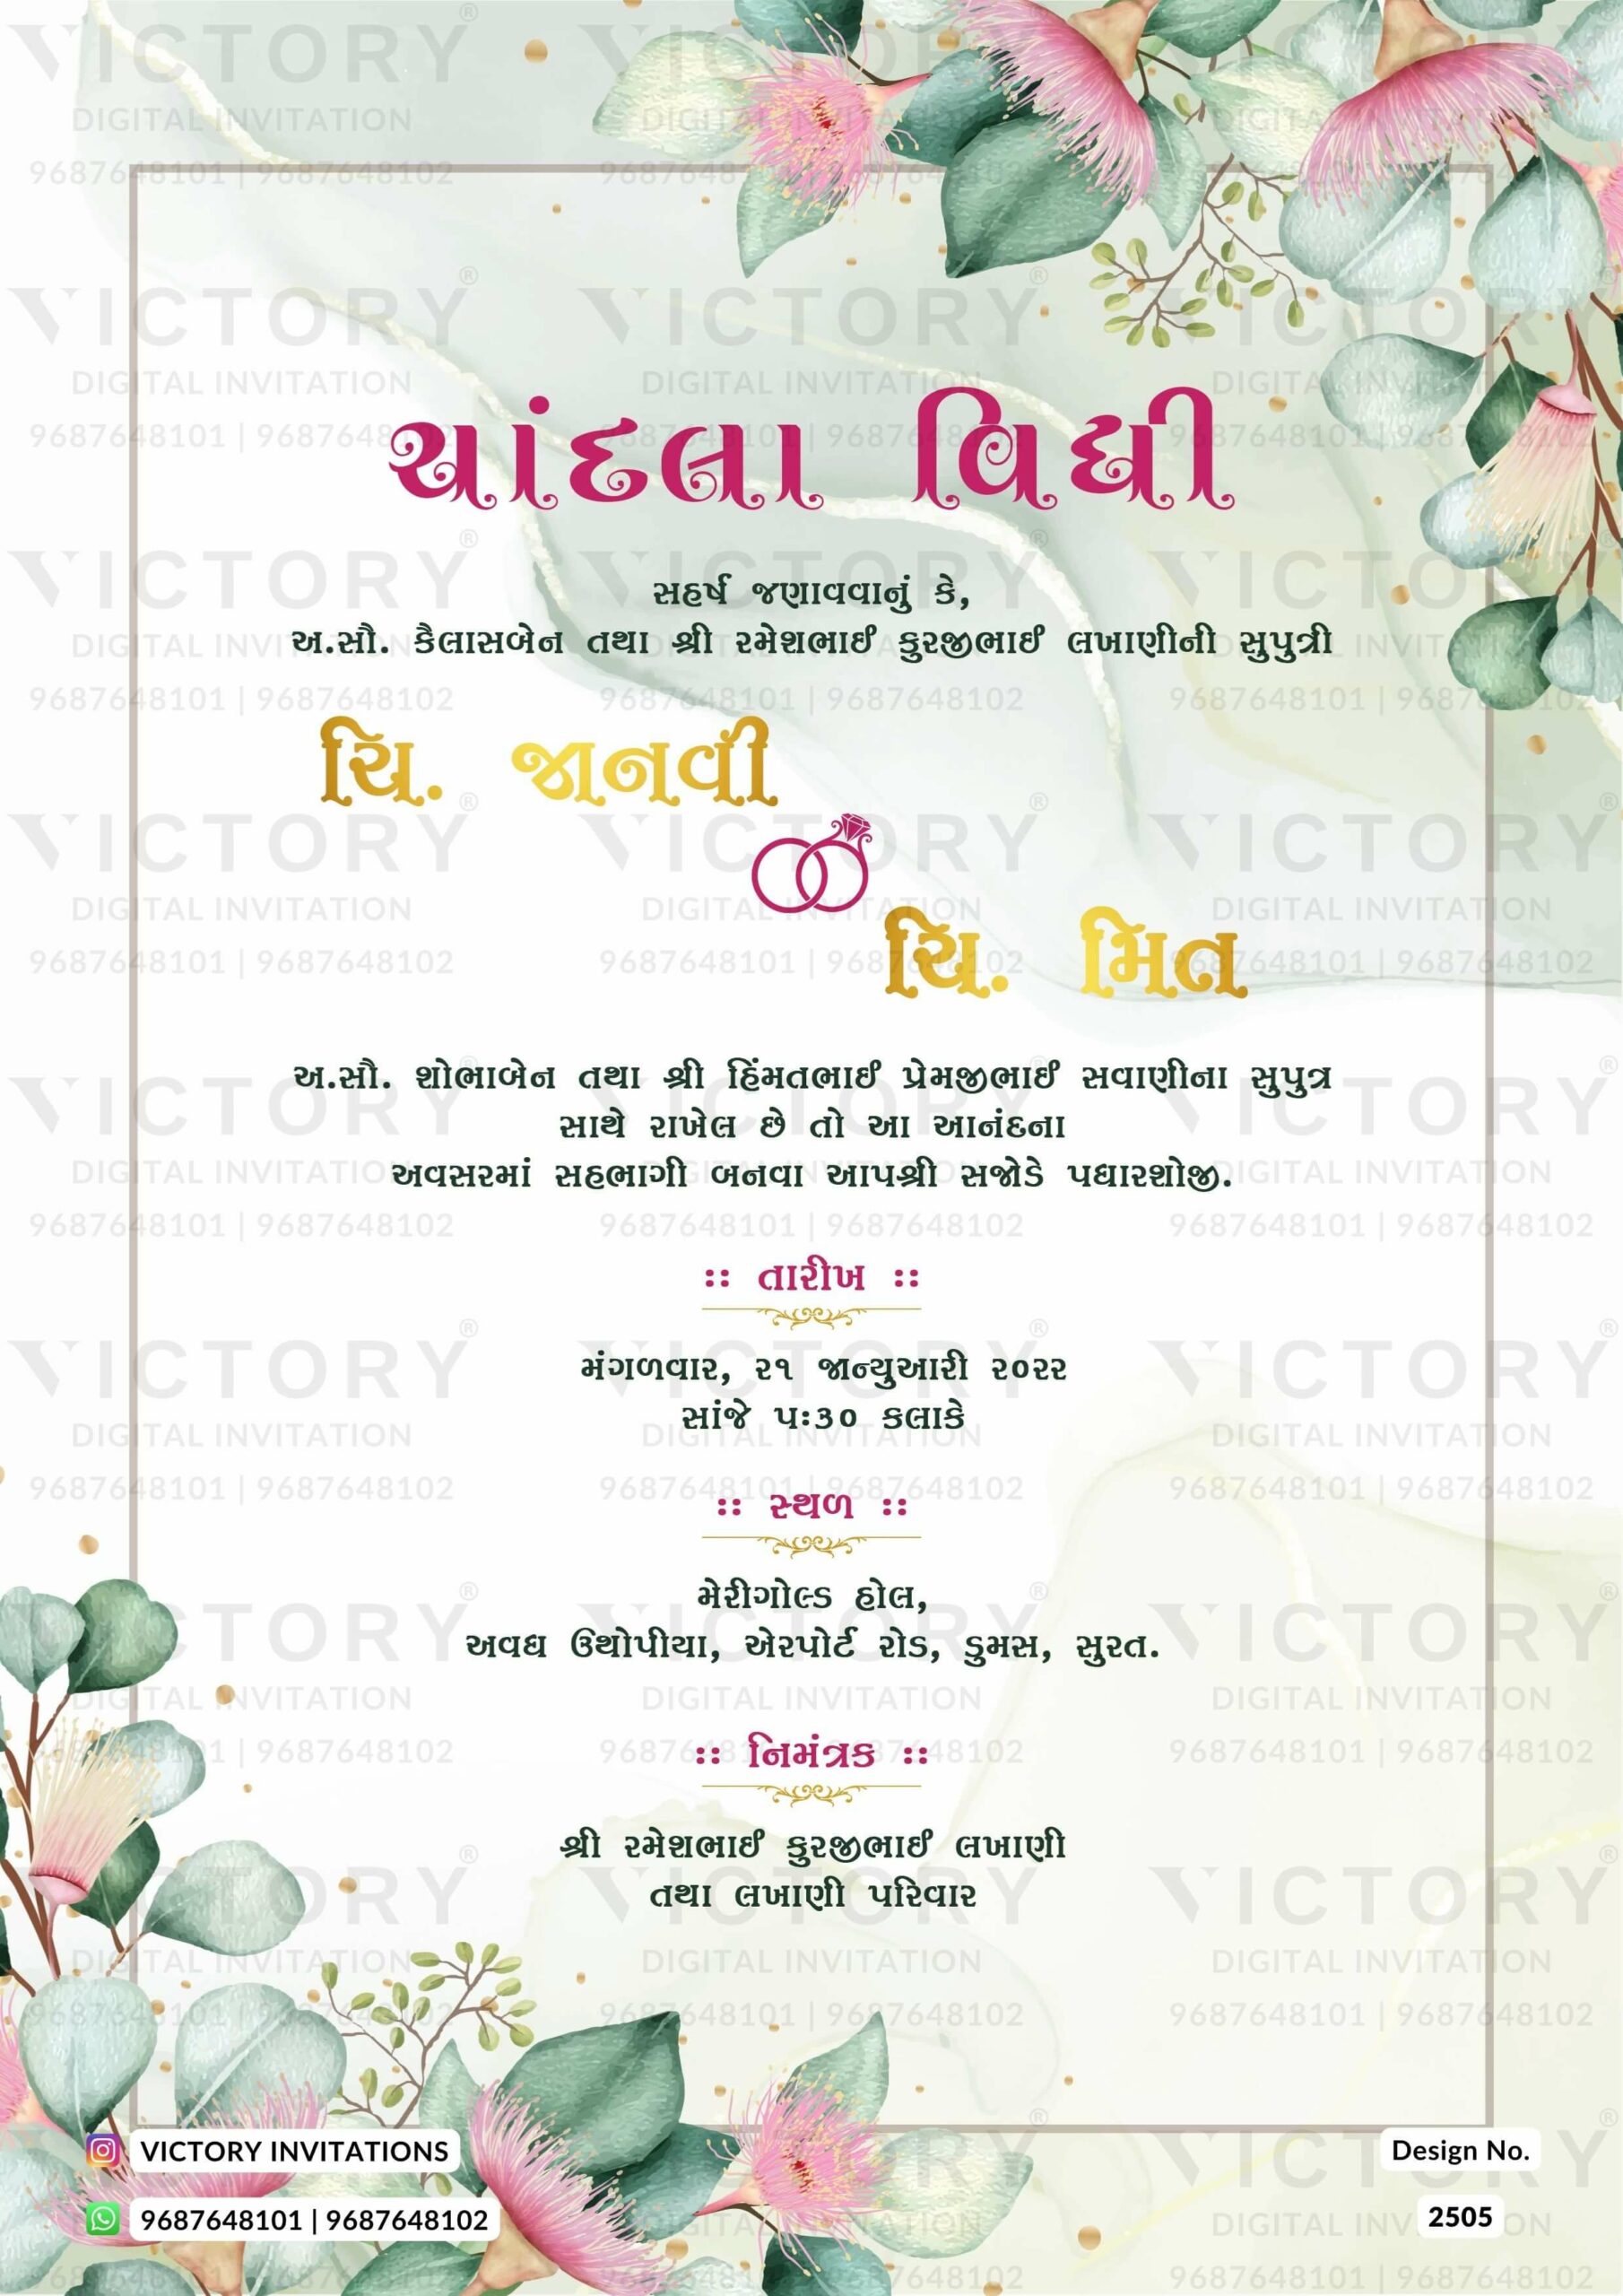 floral theme engagement digital invitation card in Gujarati language, design 2505